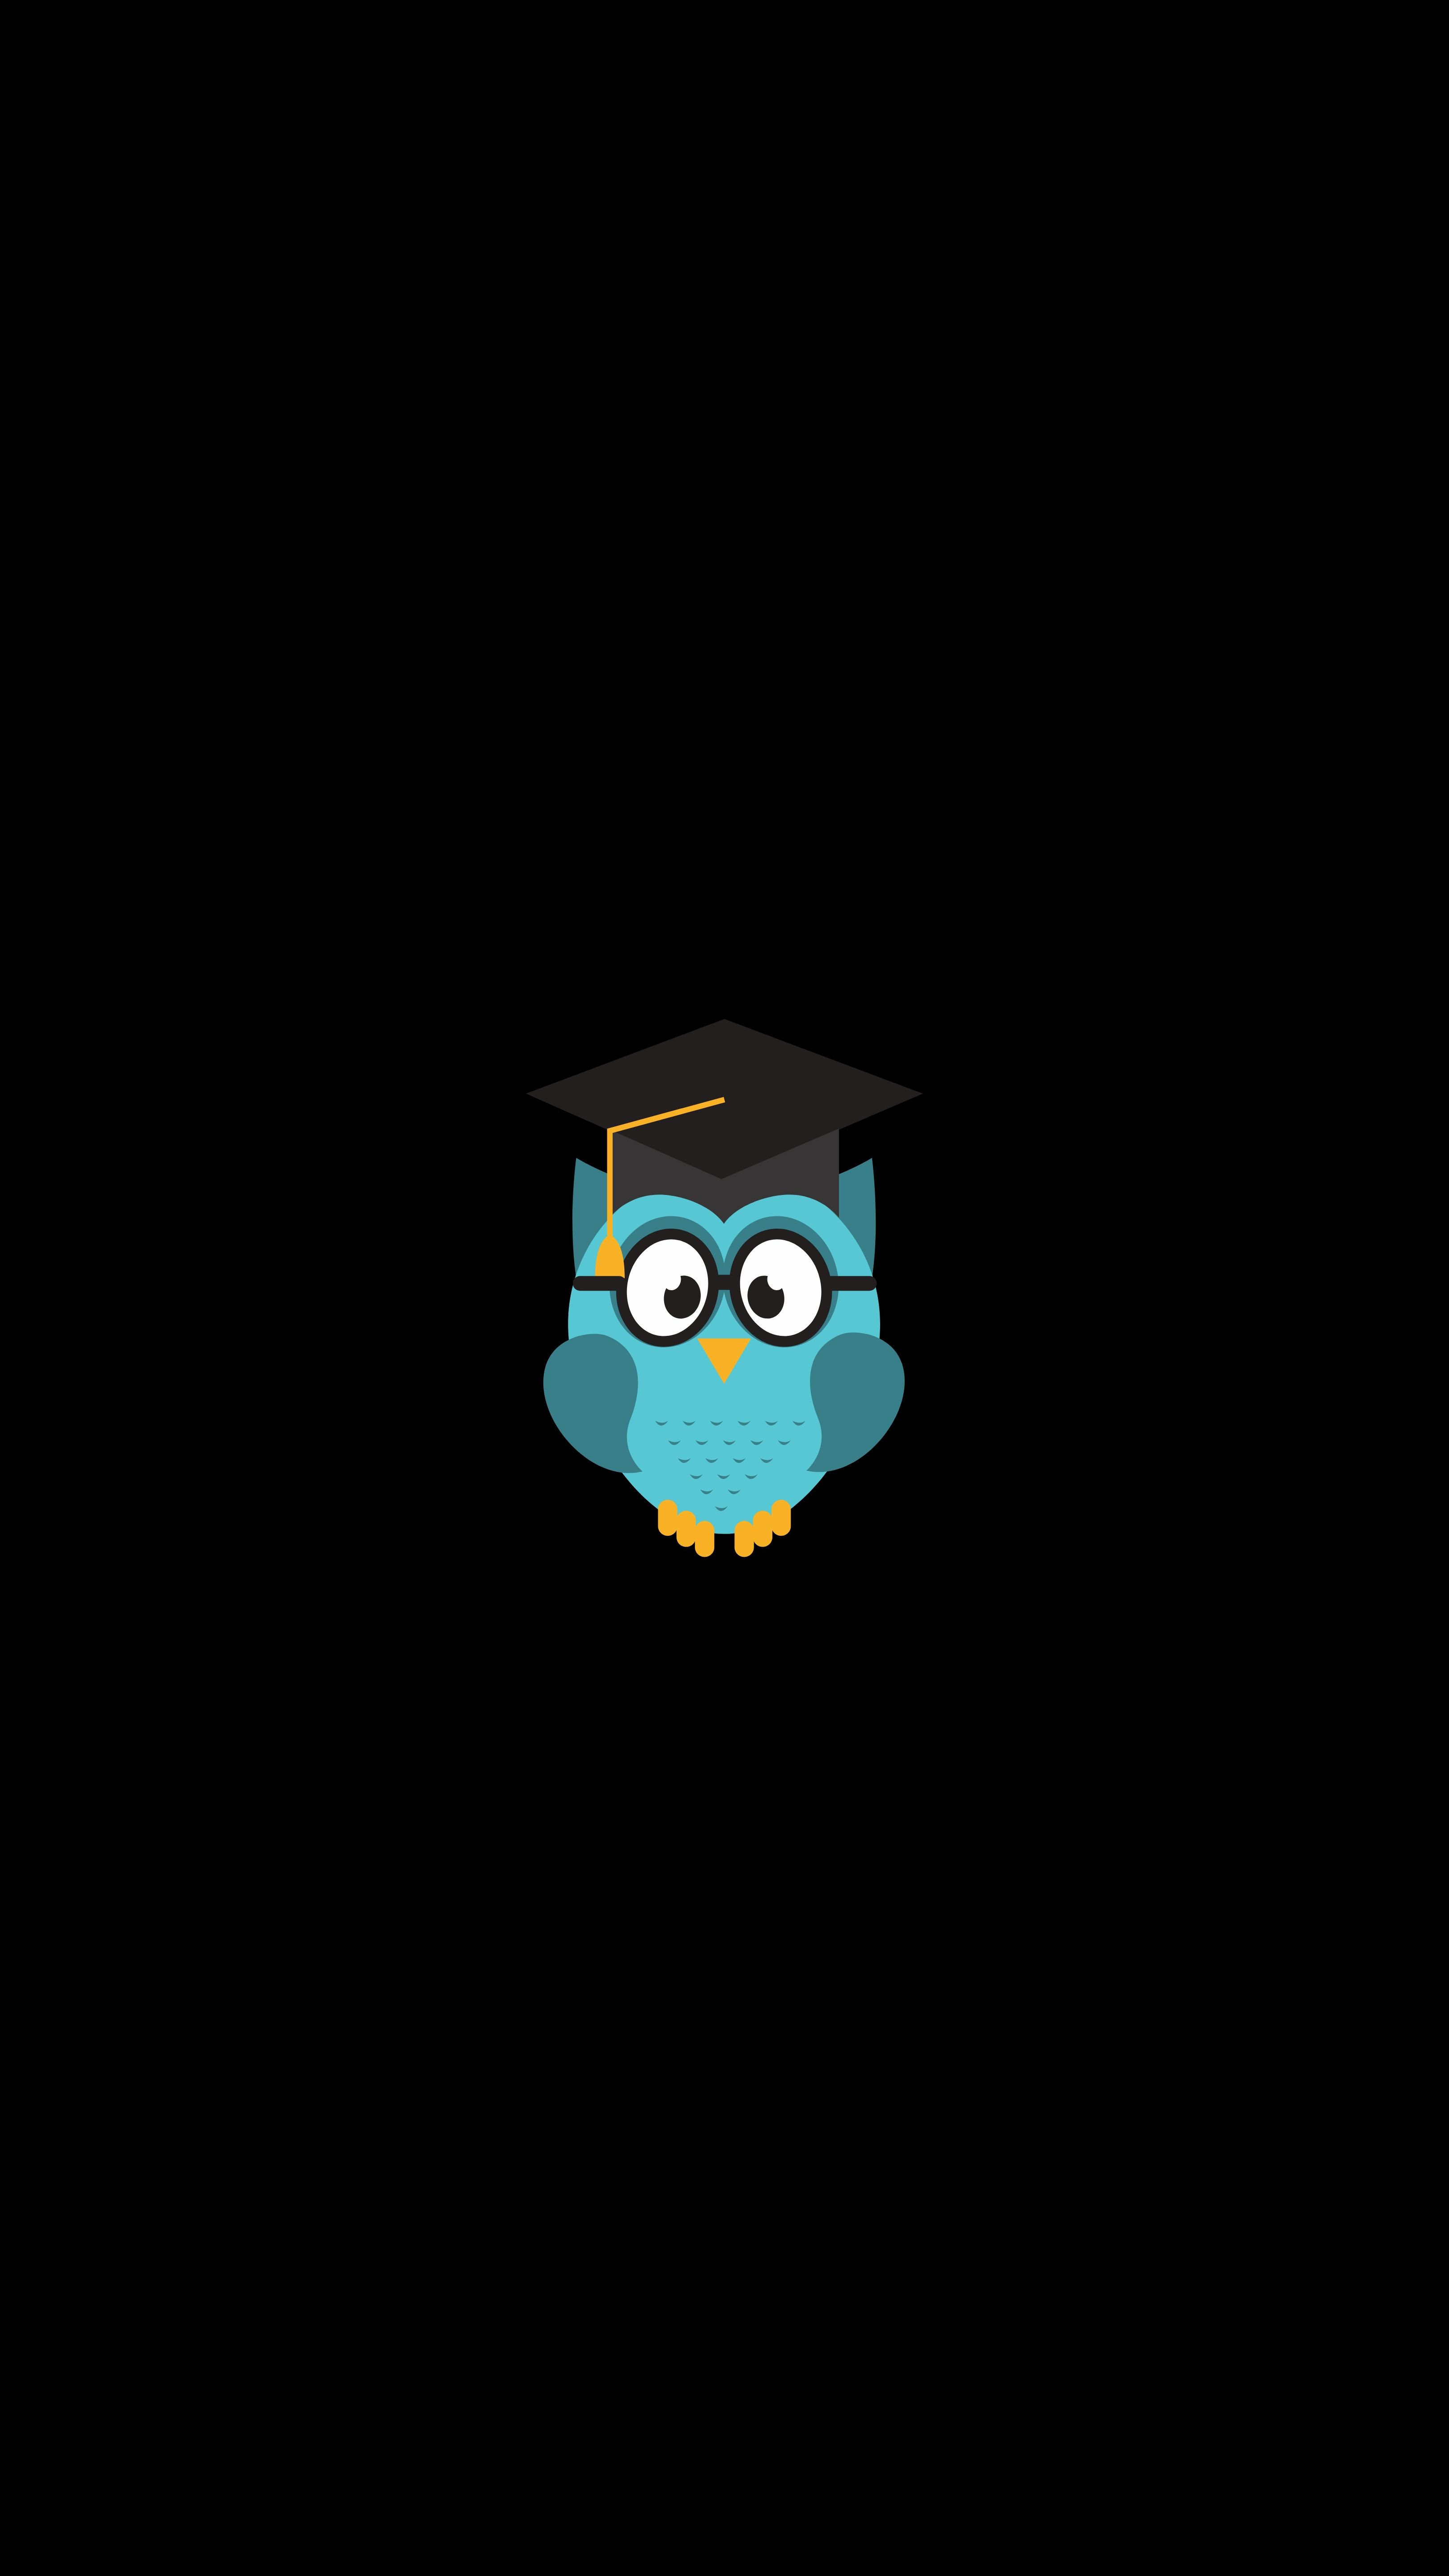 student, owl, art, vector, hat Image for desktop